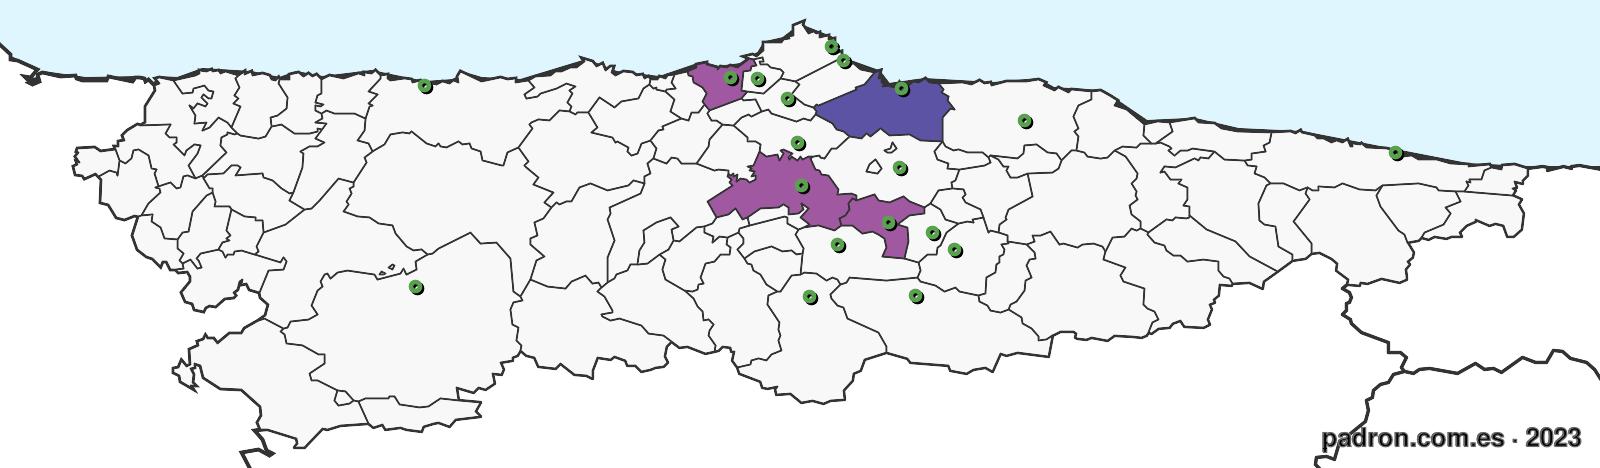 macedonios en asturias.